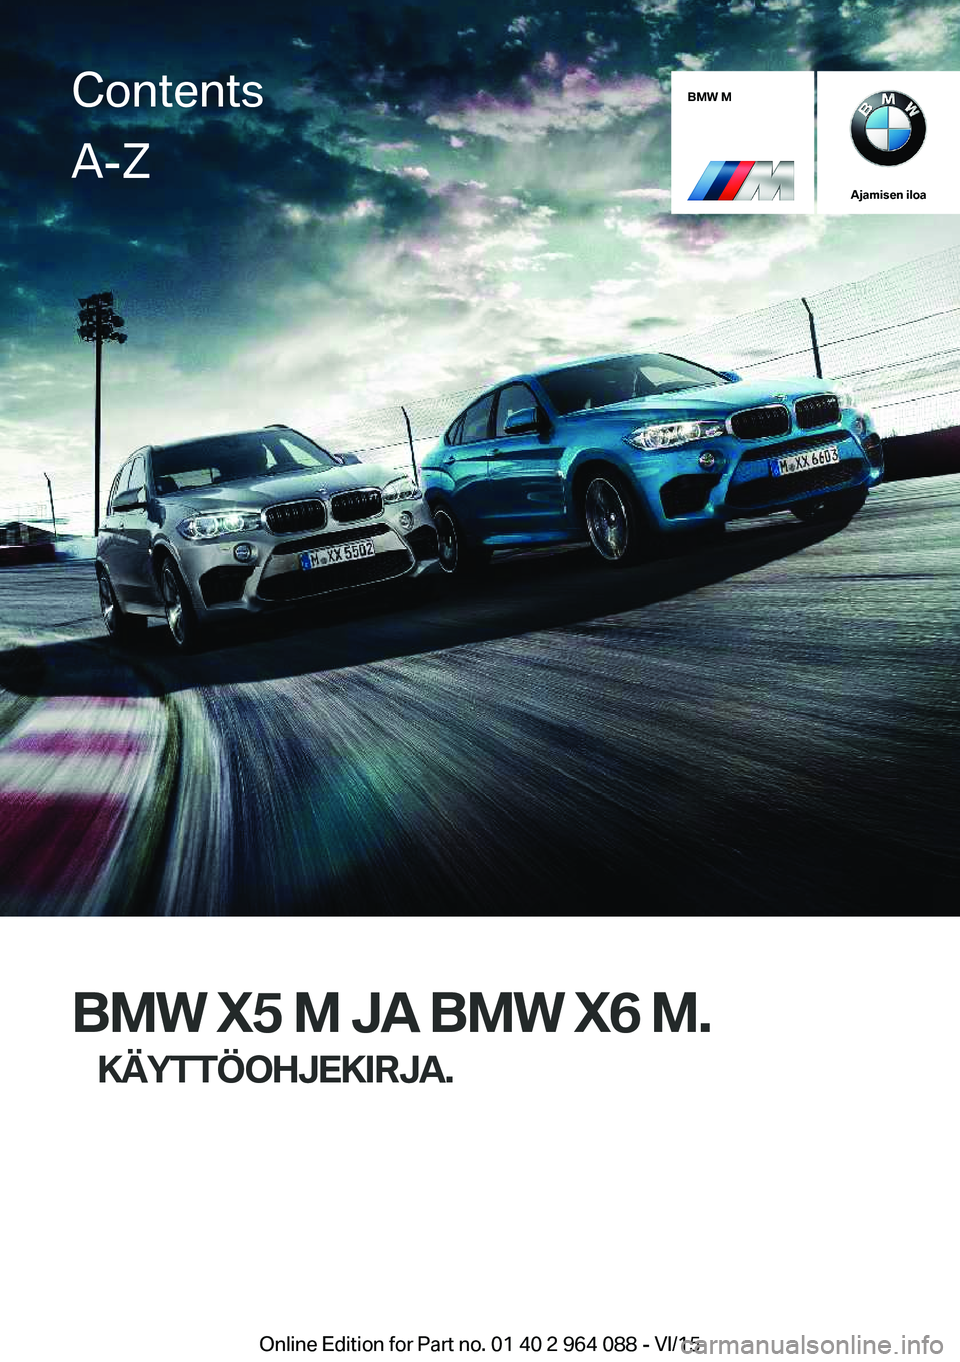 BMW X6 M 2016  Omistajan Käsikirja (in Finnish) BMW M
Ajamisen iloa
BMW X5 M JA BMW X6 M.KÄYTTÖOHJEKIRJA.
ContentsA-Z
Online Edition for Part no. 01 40 2 964 088 - VI/15   